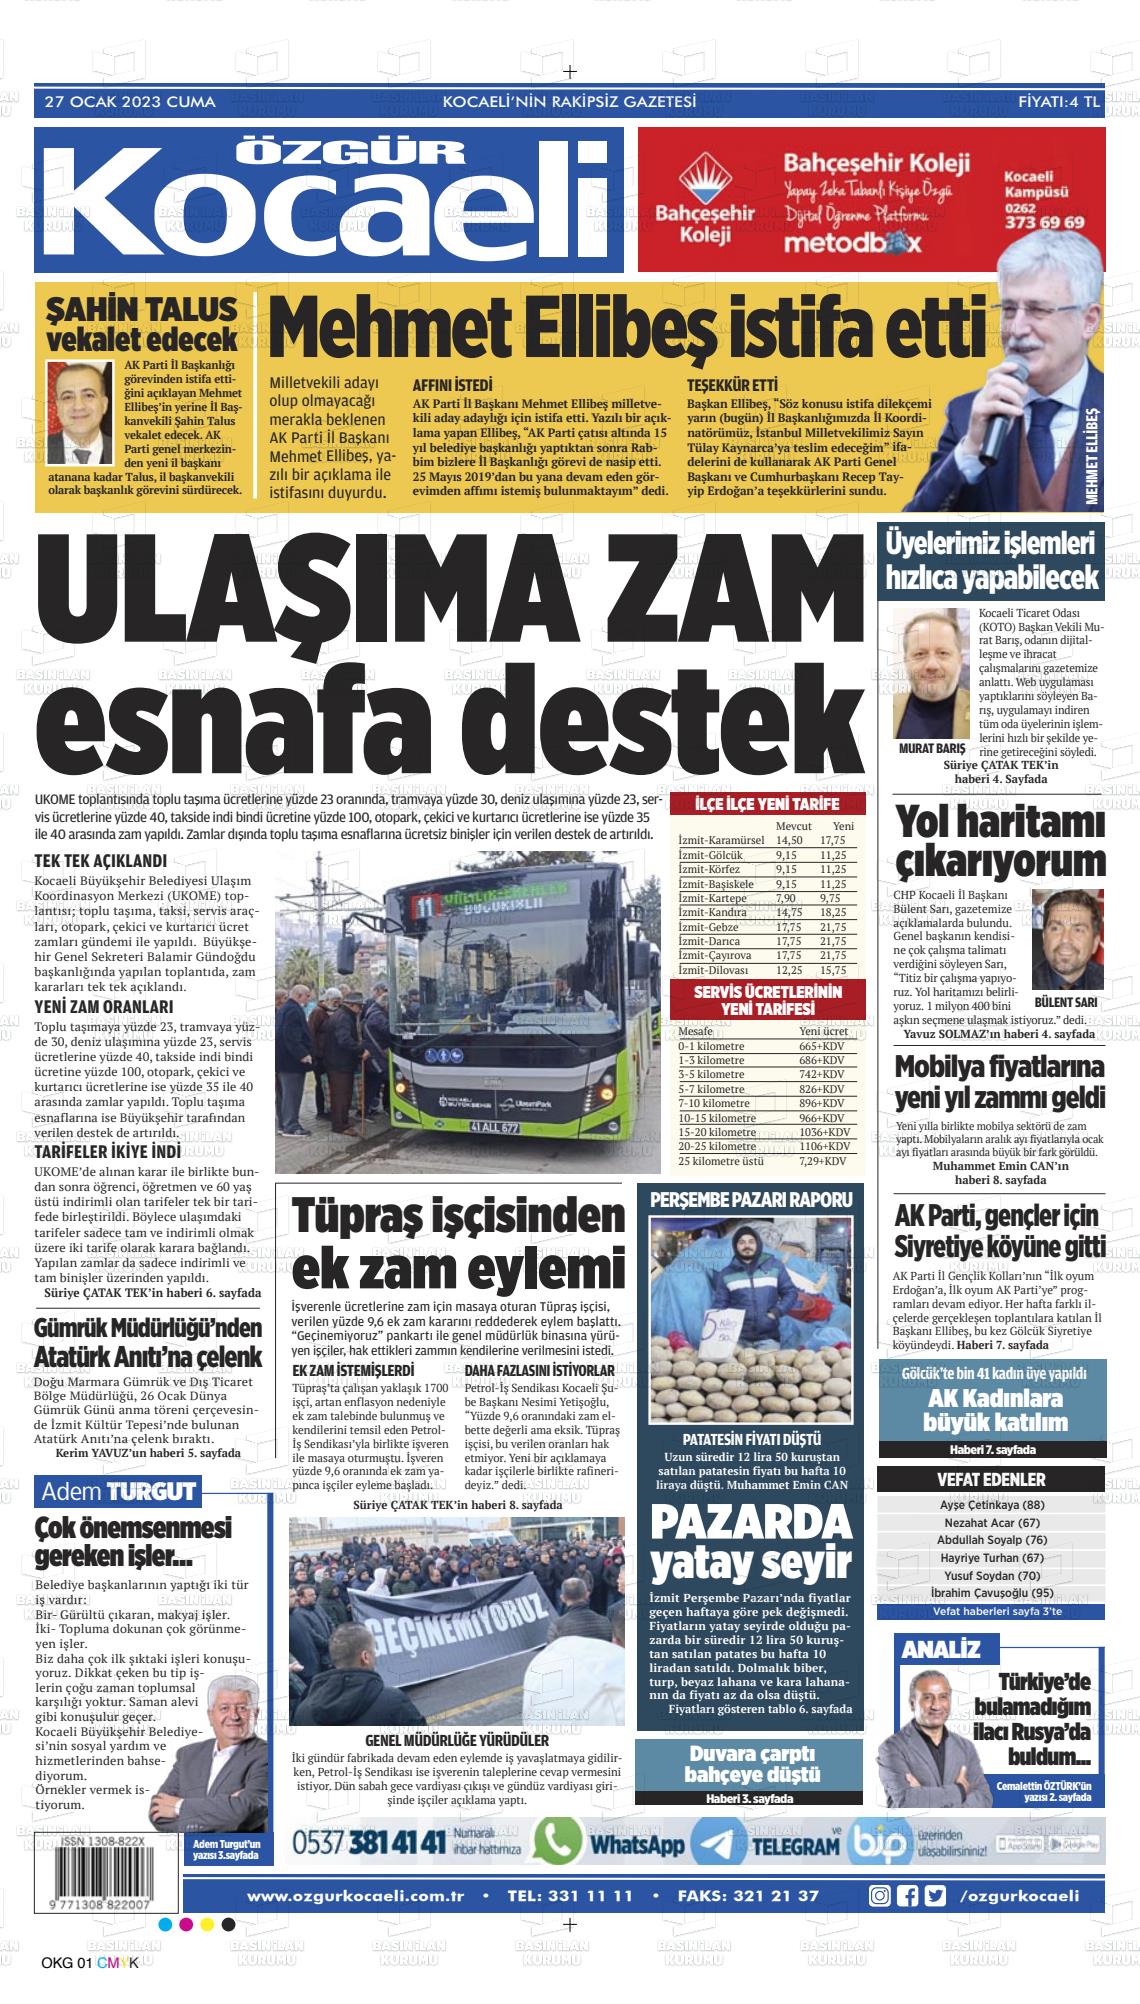 27 Ocak 2023 Özgür Kocaeli Gazete Manşeti